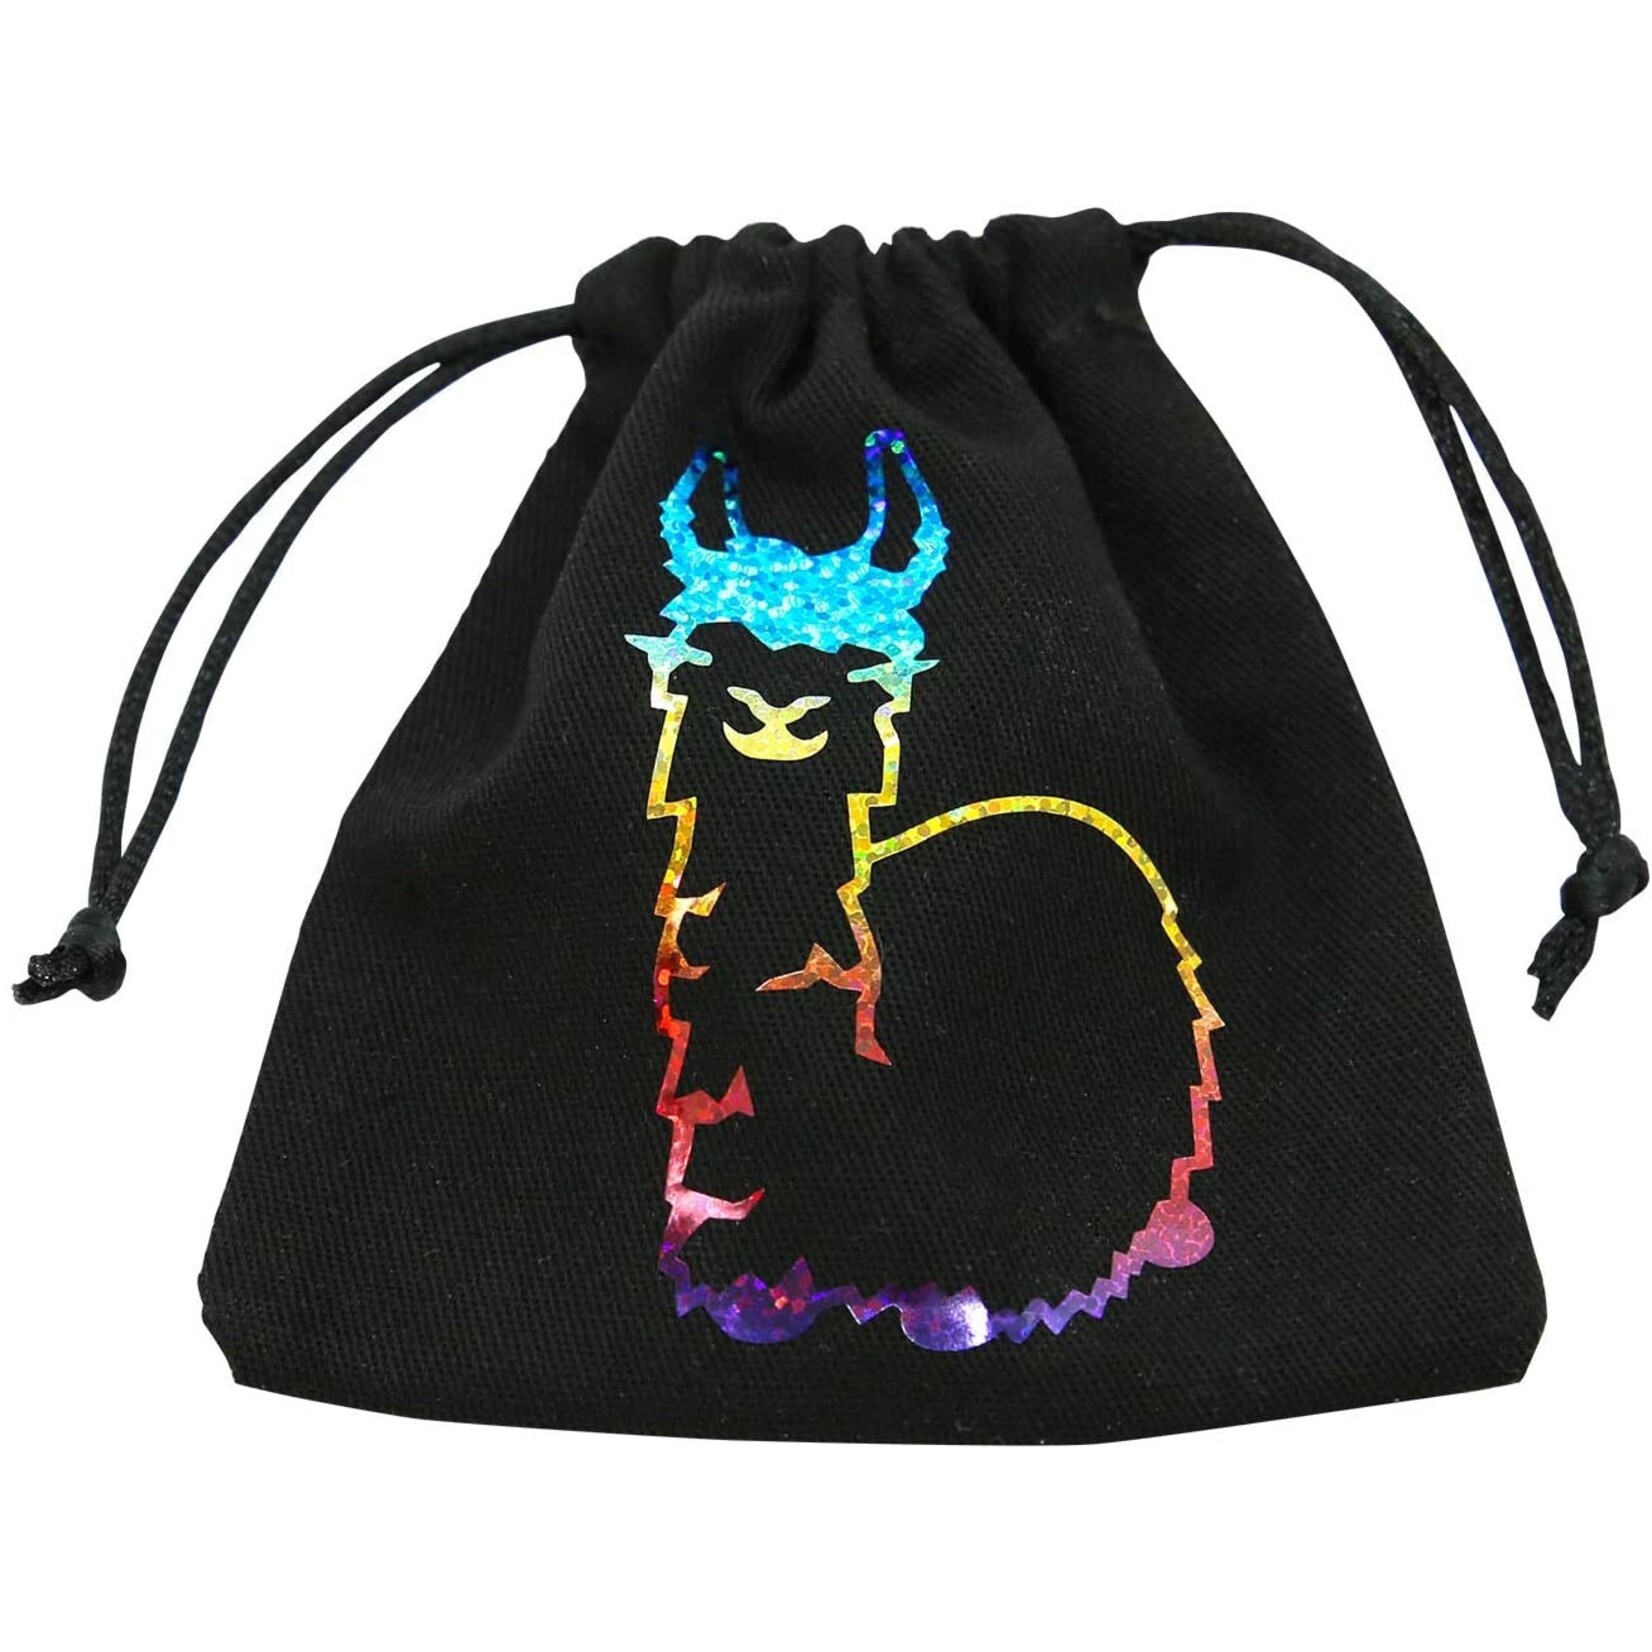 Q-Workshop Fabulous Llama Dice Bag